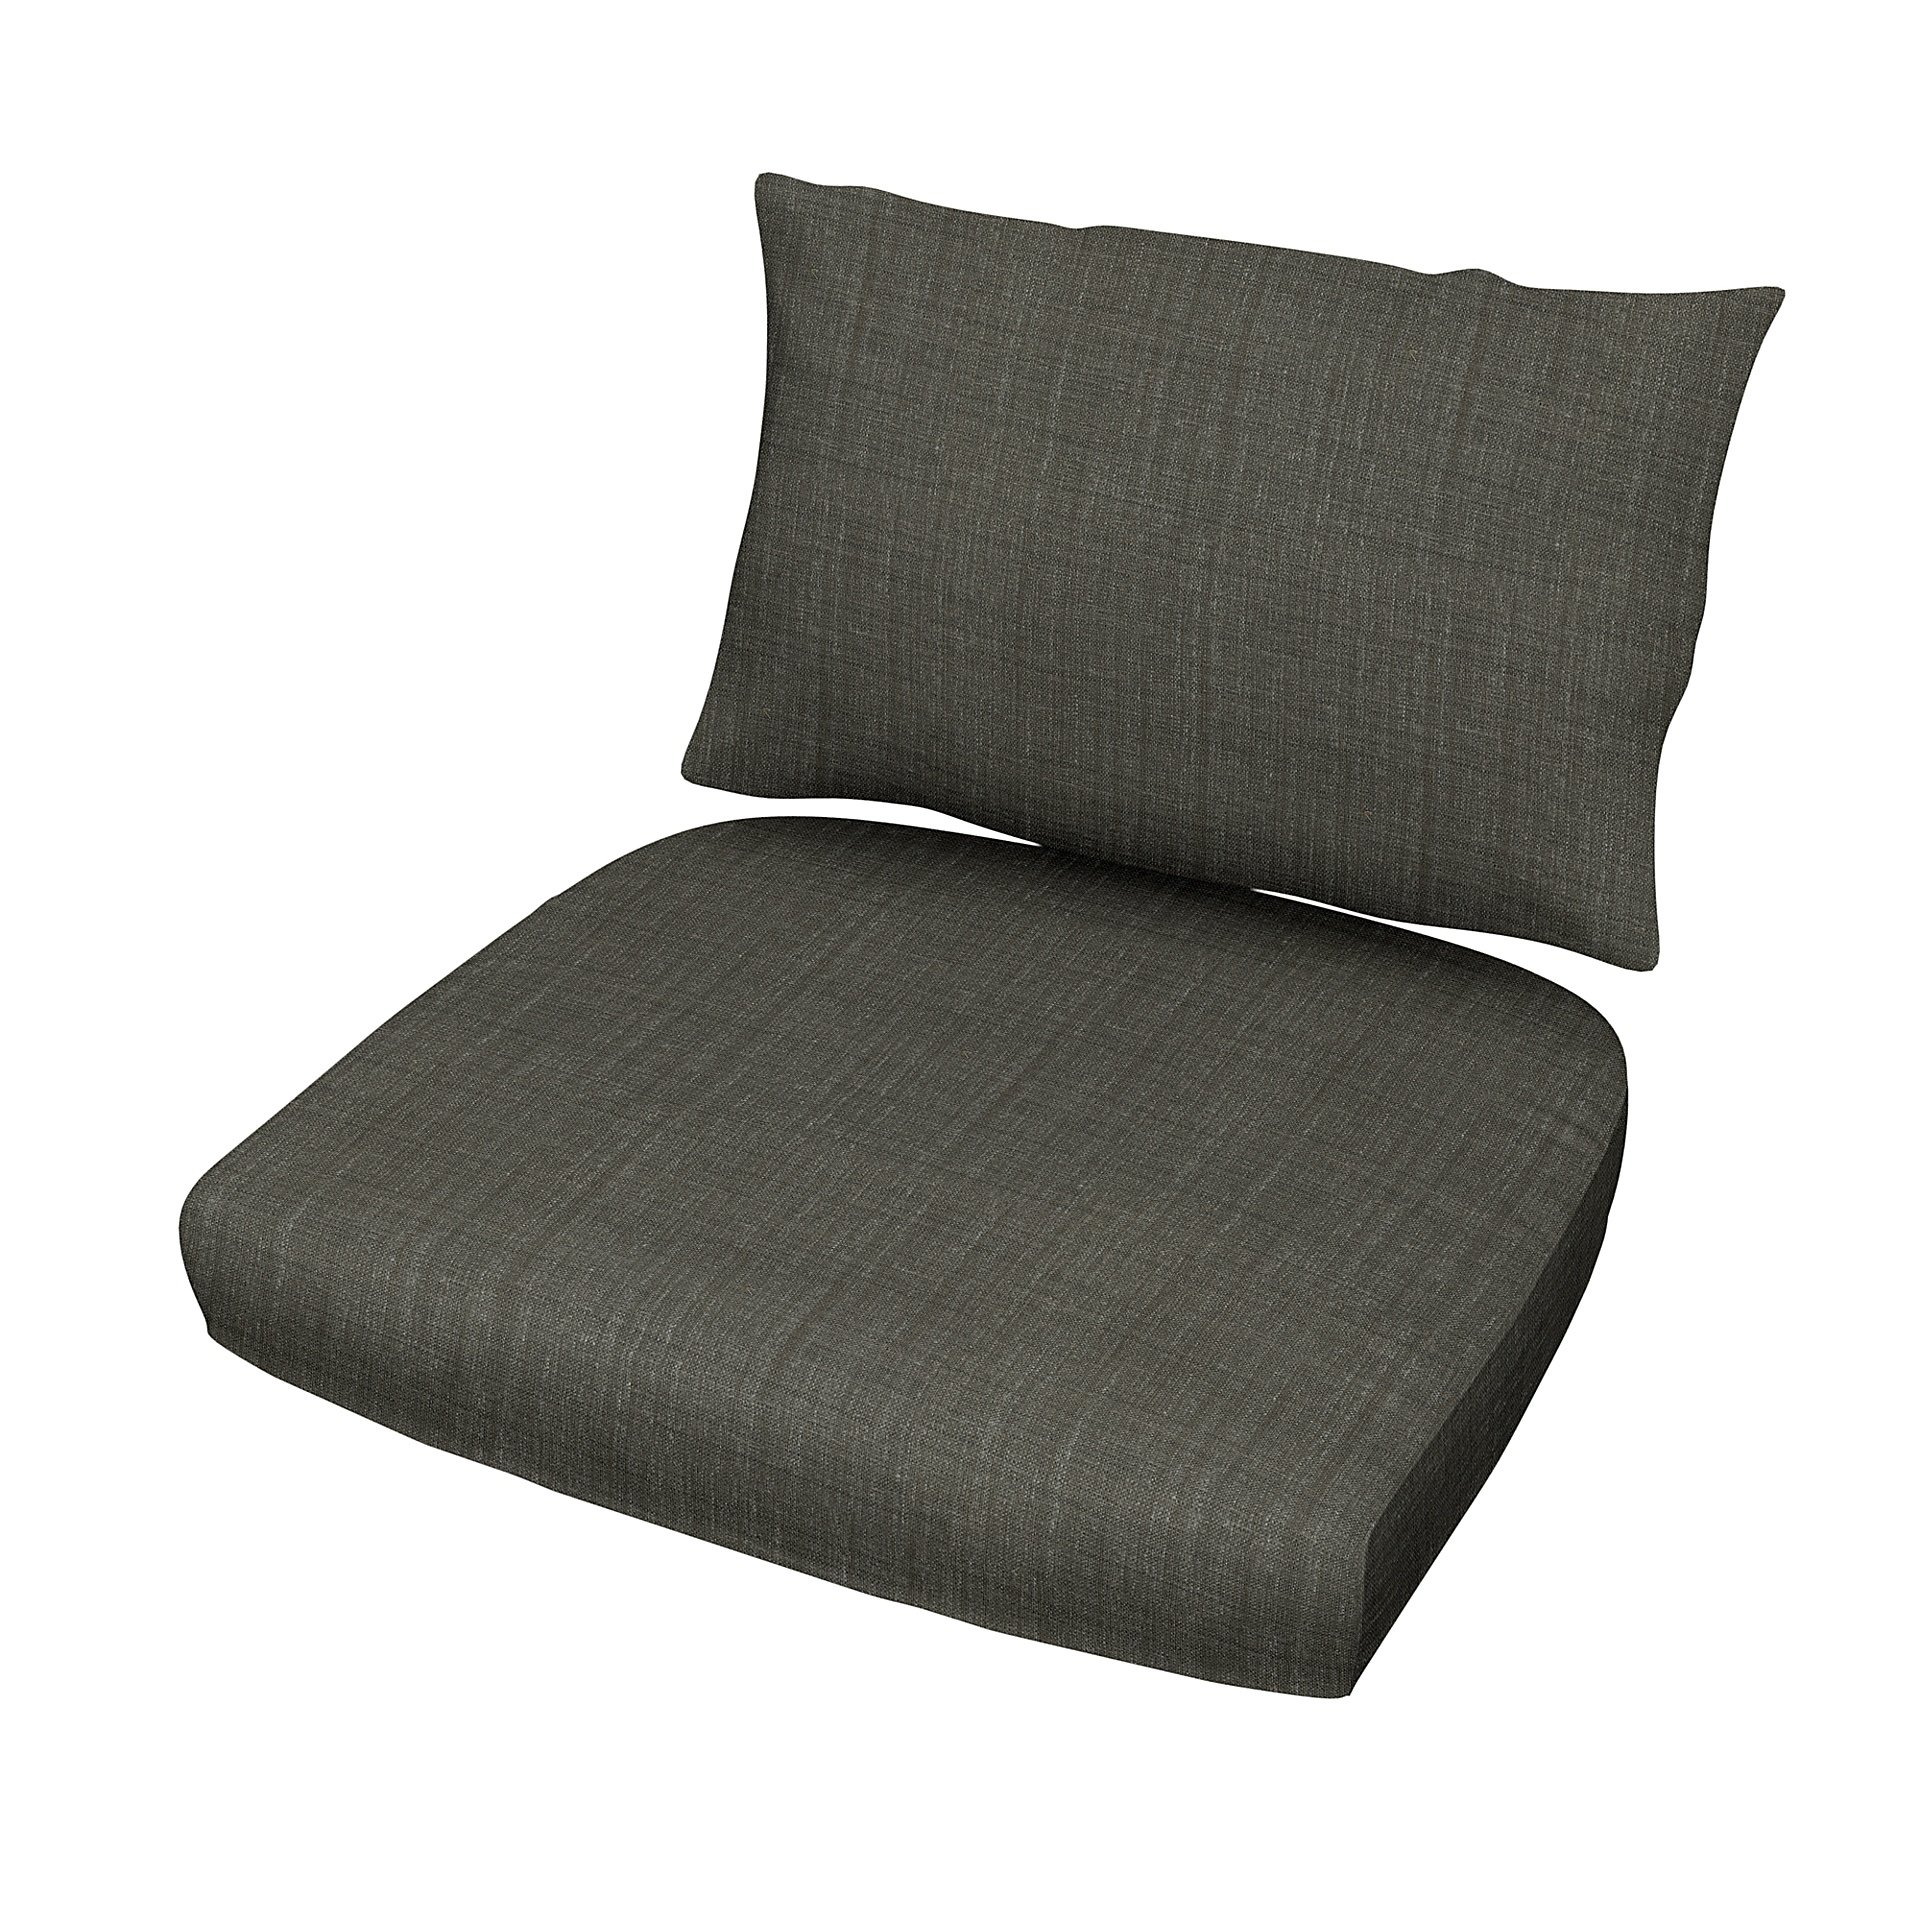 IKEA - Stockholm Rattan Chair Cushion Cover Set, Mole Brown, Boucle & Texture - Bemz